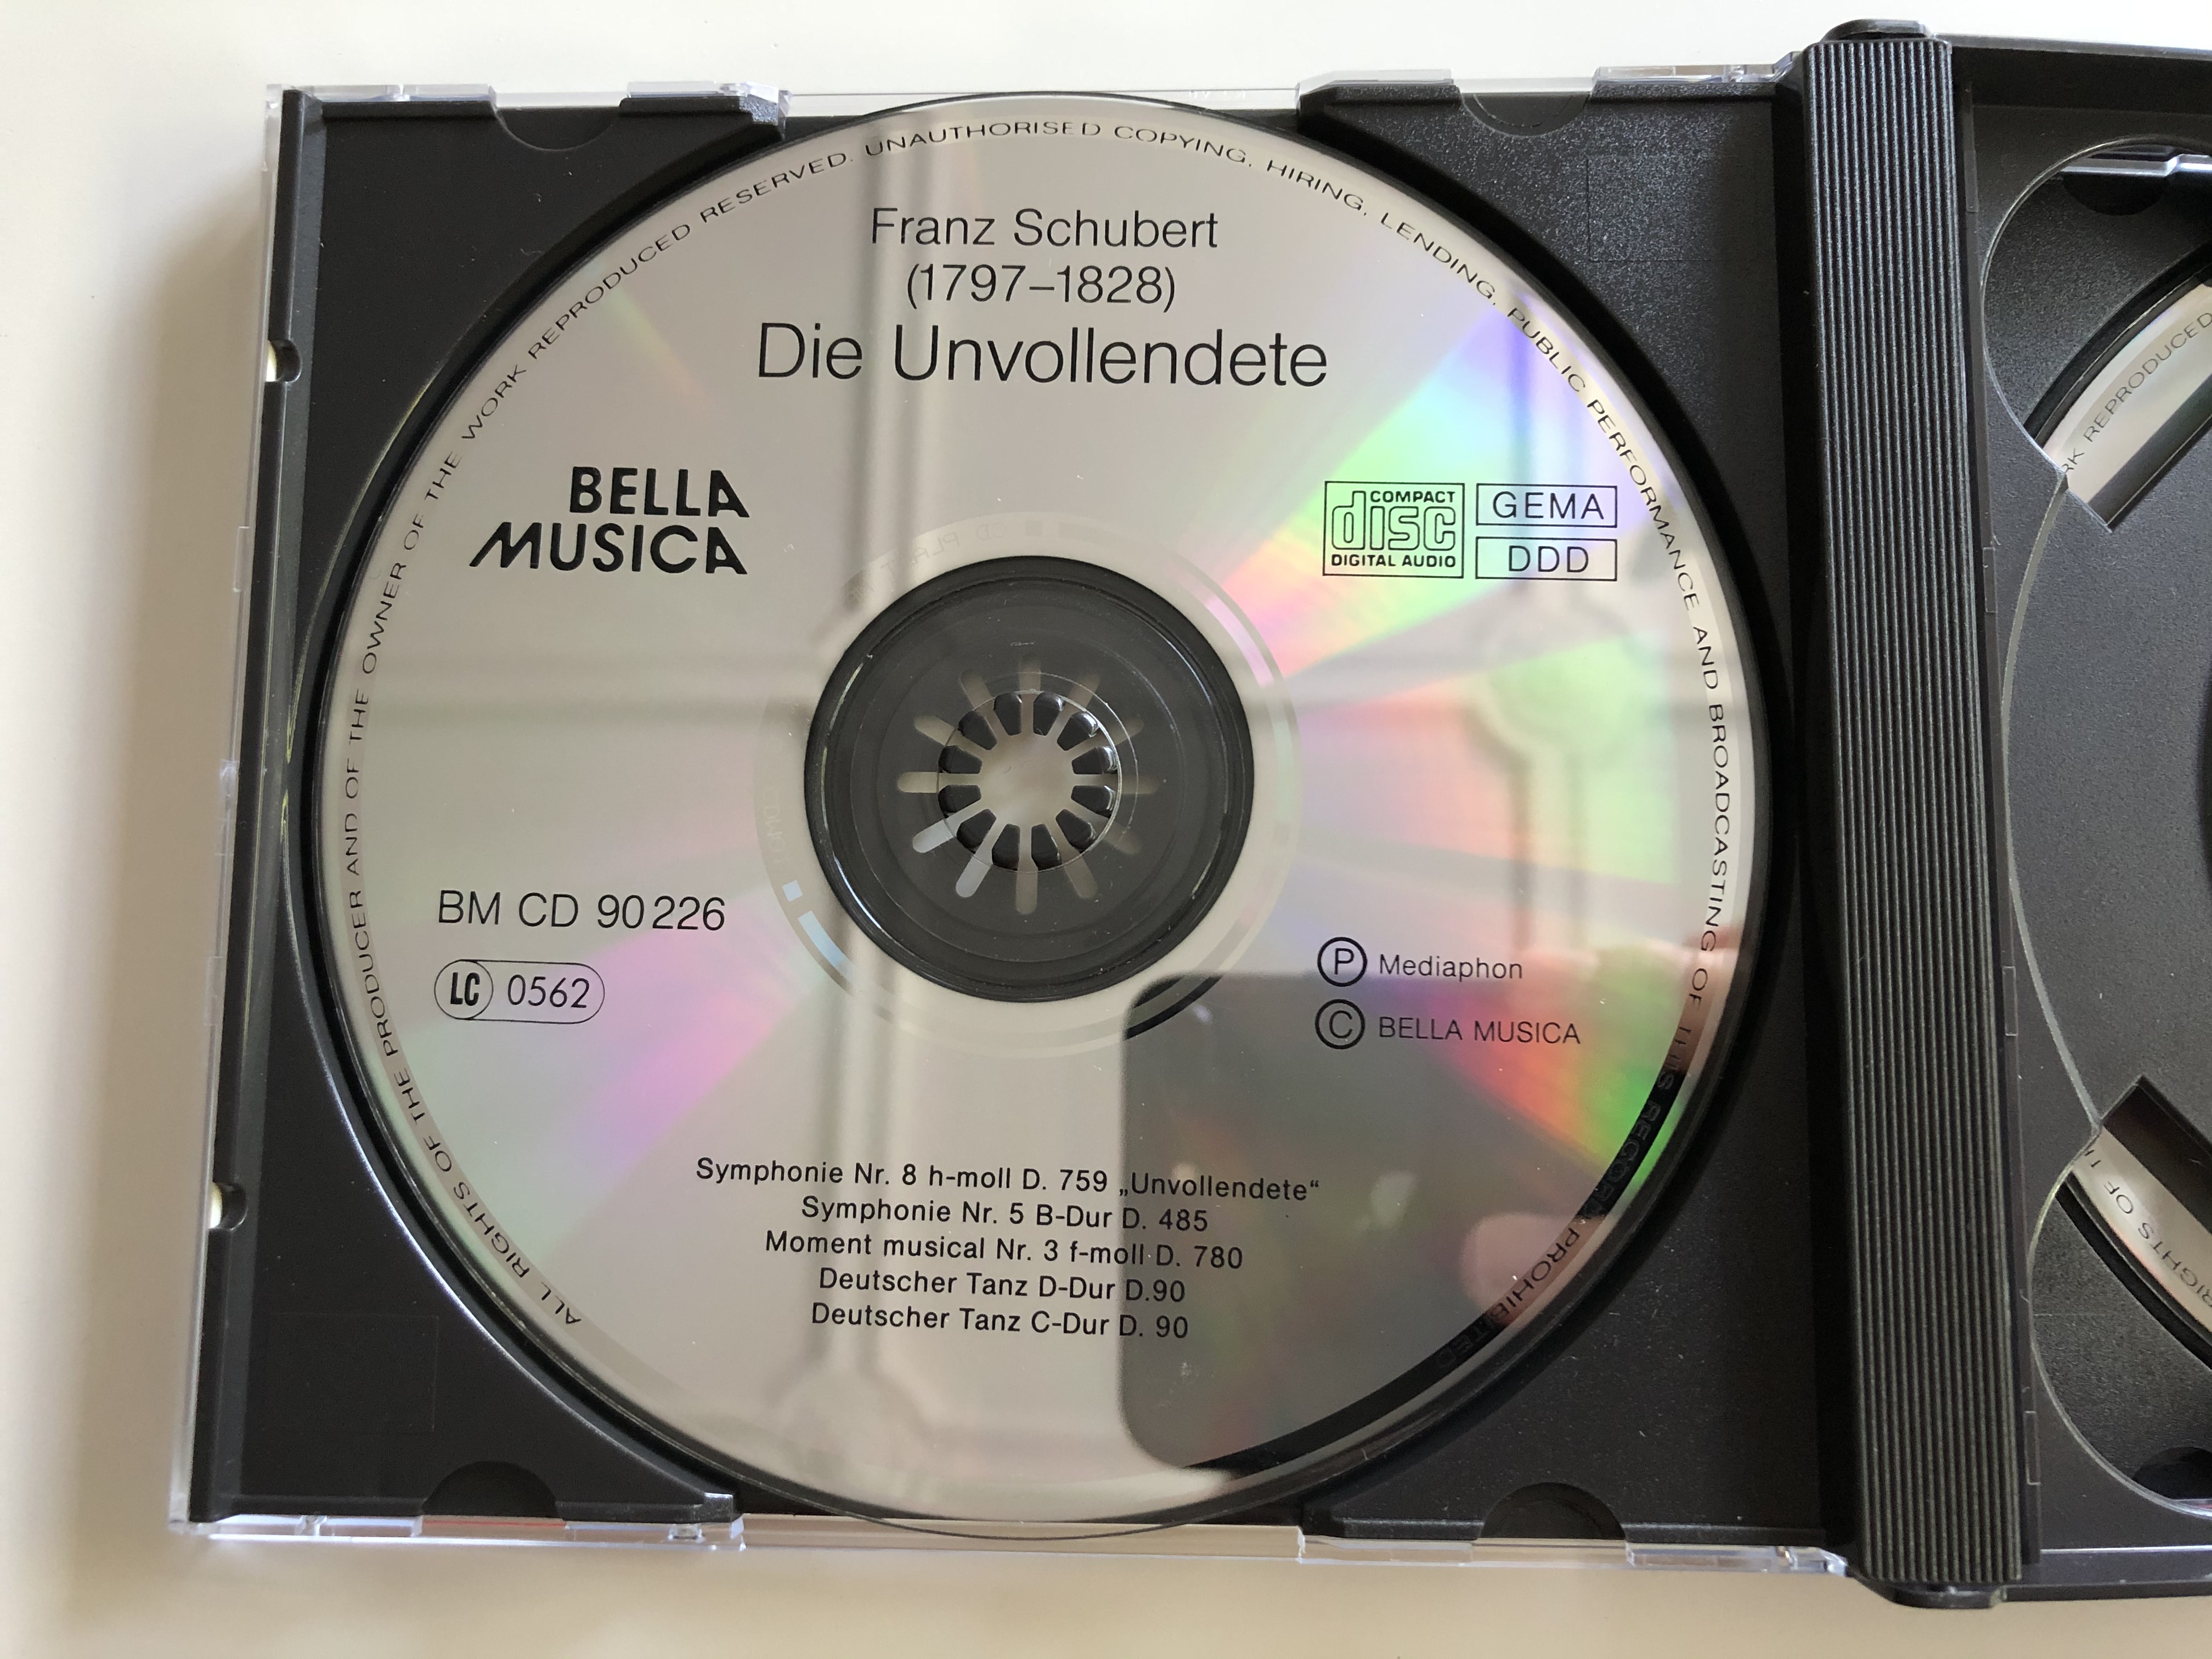 franz-schubert-die-unvollendete-edvard-grieg-peer-gynt-juite-bella-musica-2x-audio-cd-cd-902262-3-.jpg